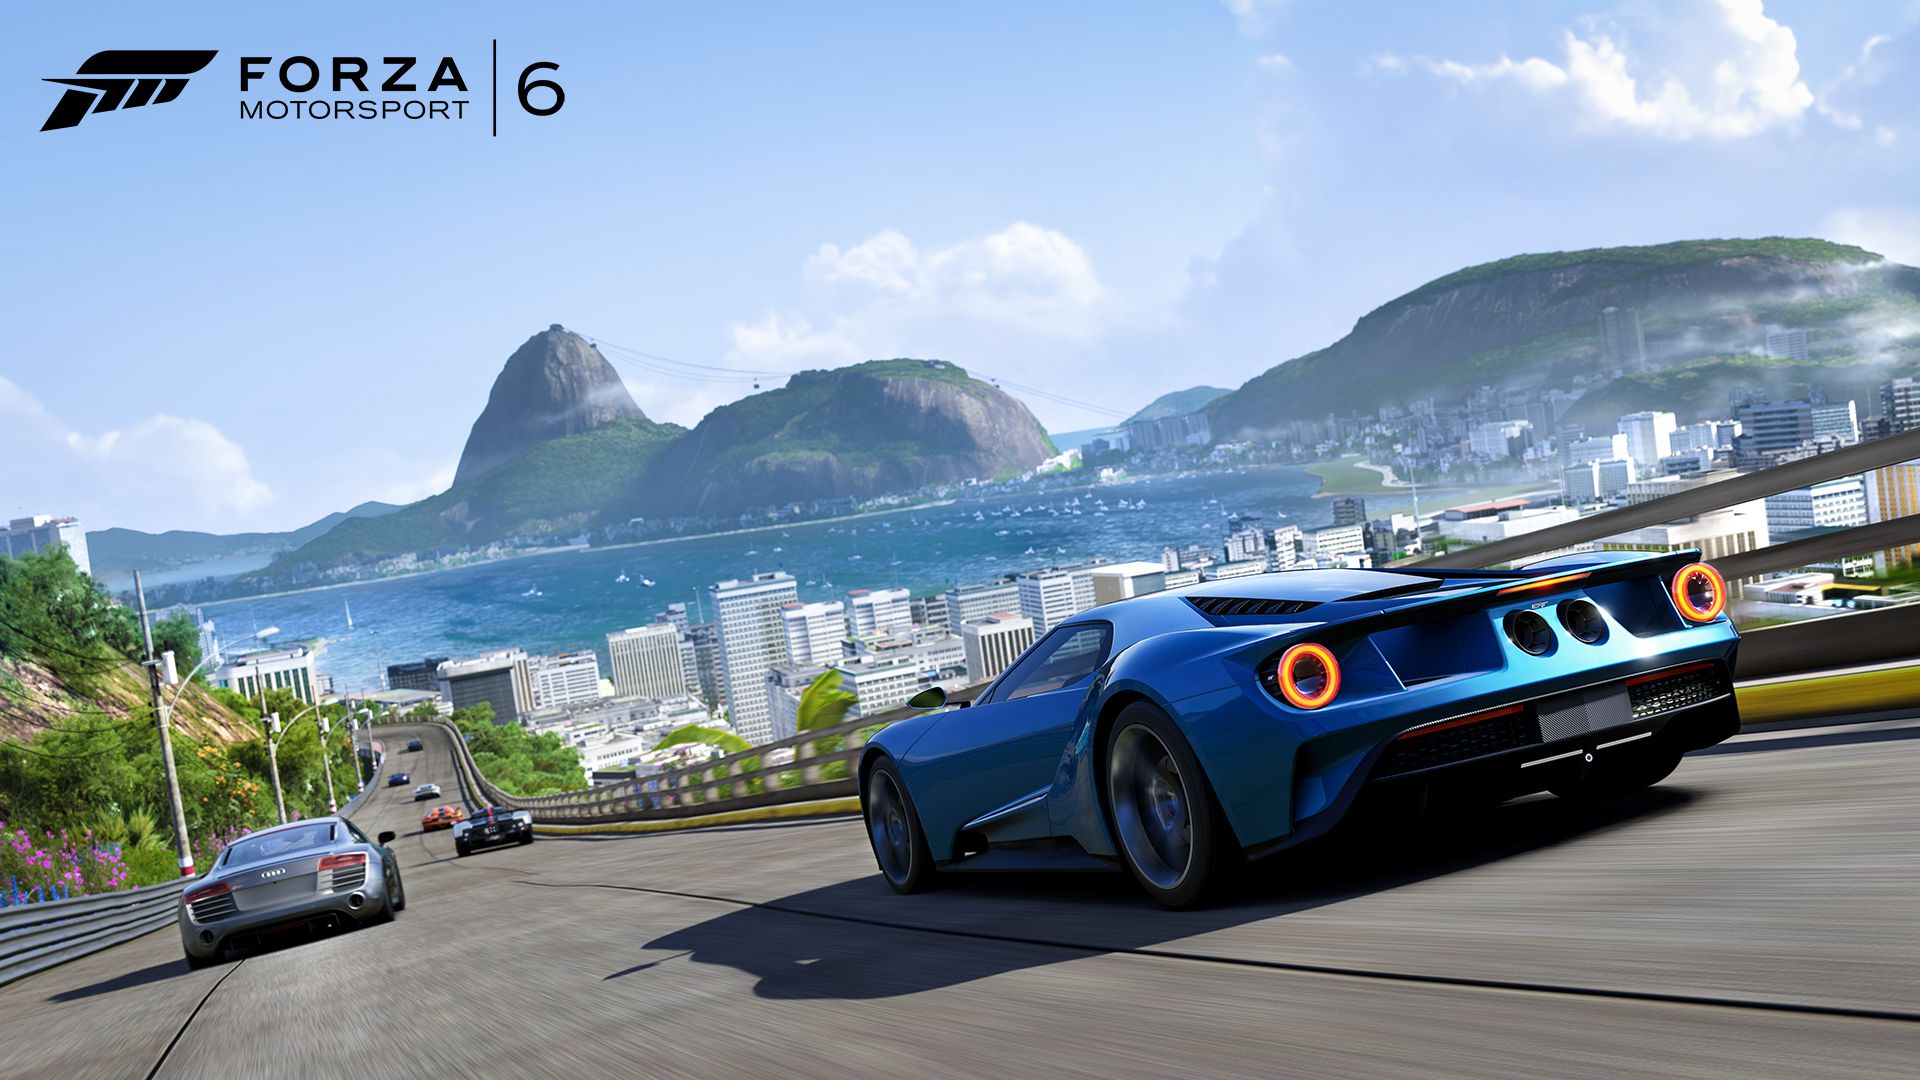 Forza6-E3-PressKit-06-WM-jpg.0.jpg